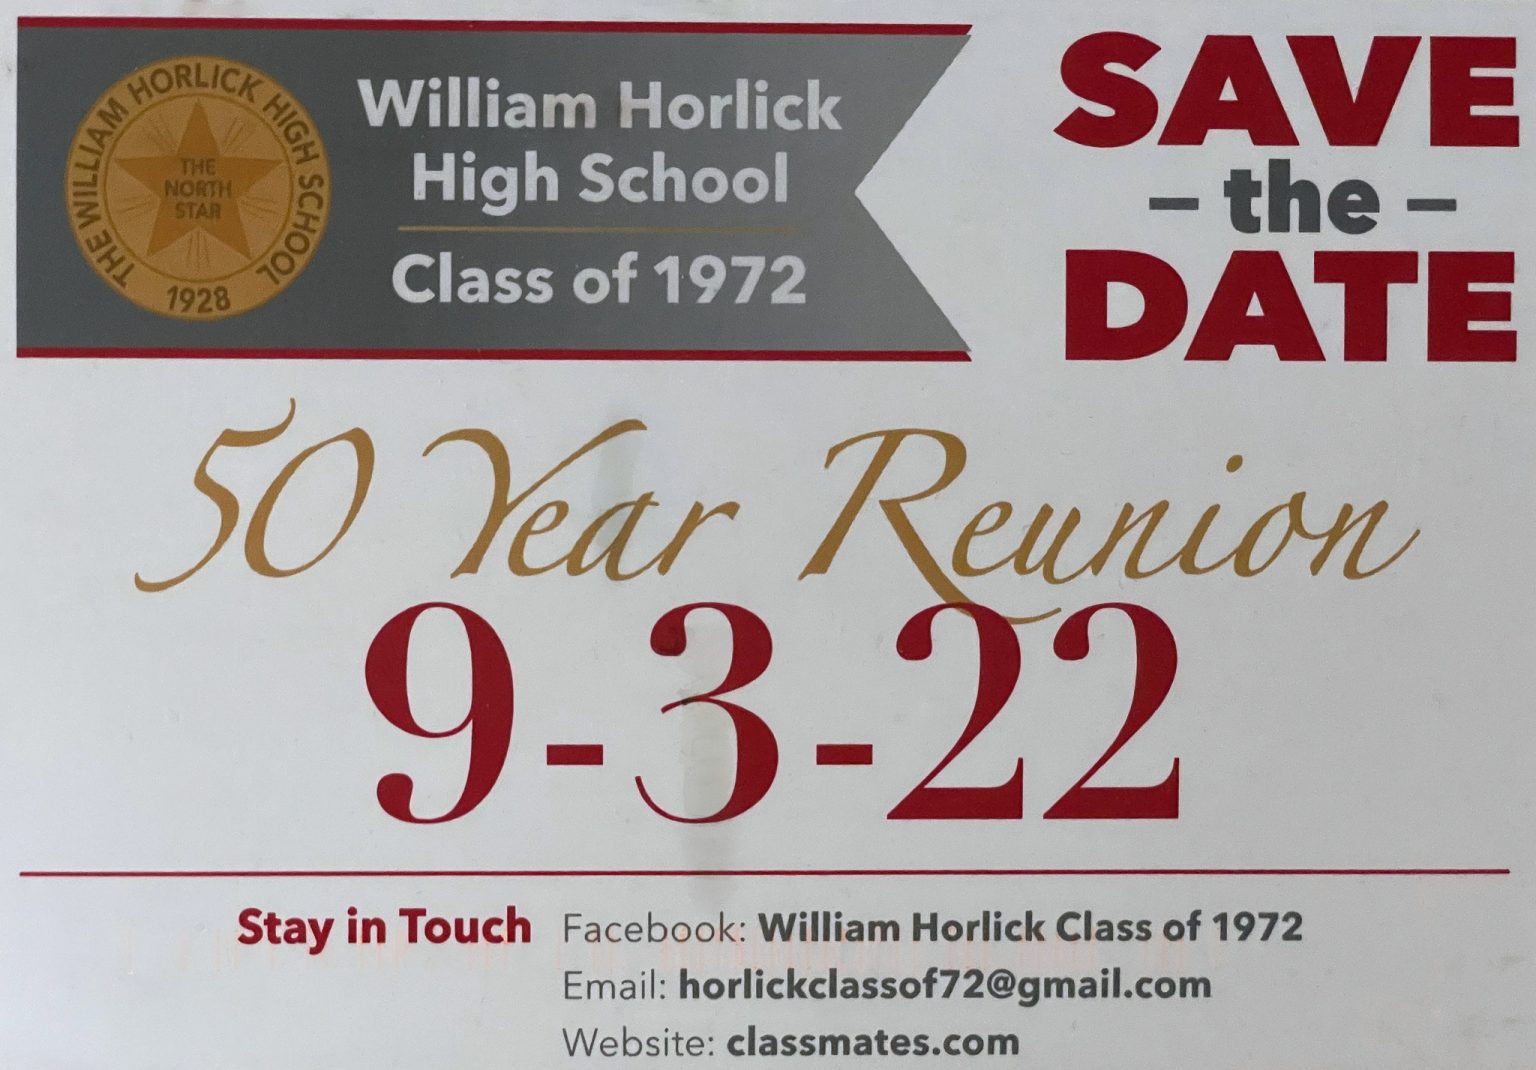 50 Year Reunion William Horlick High School Class of '72